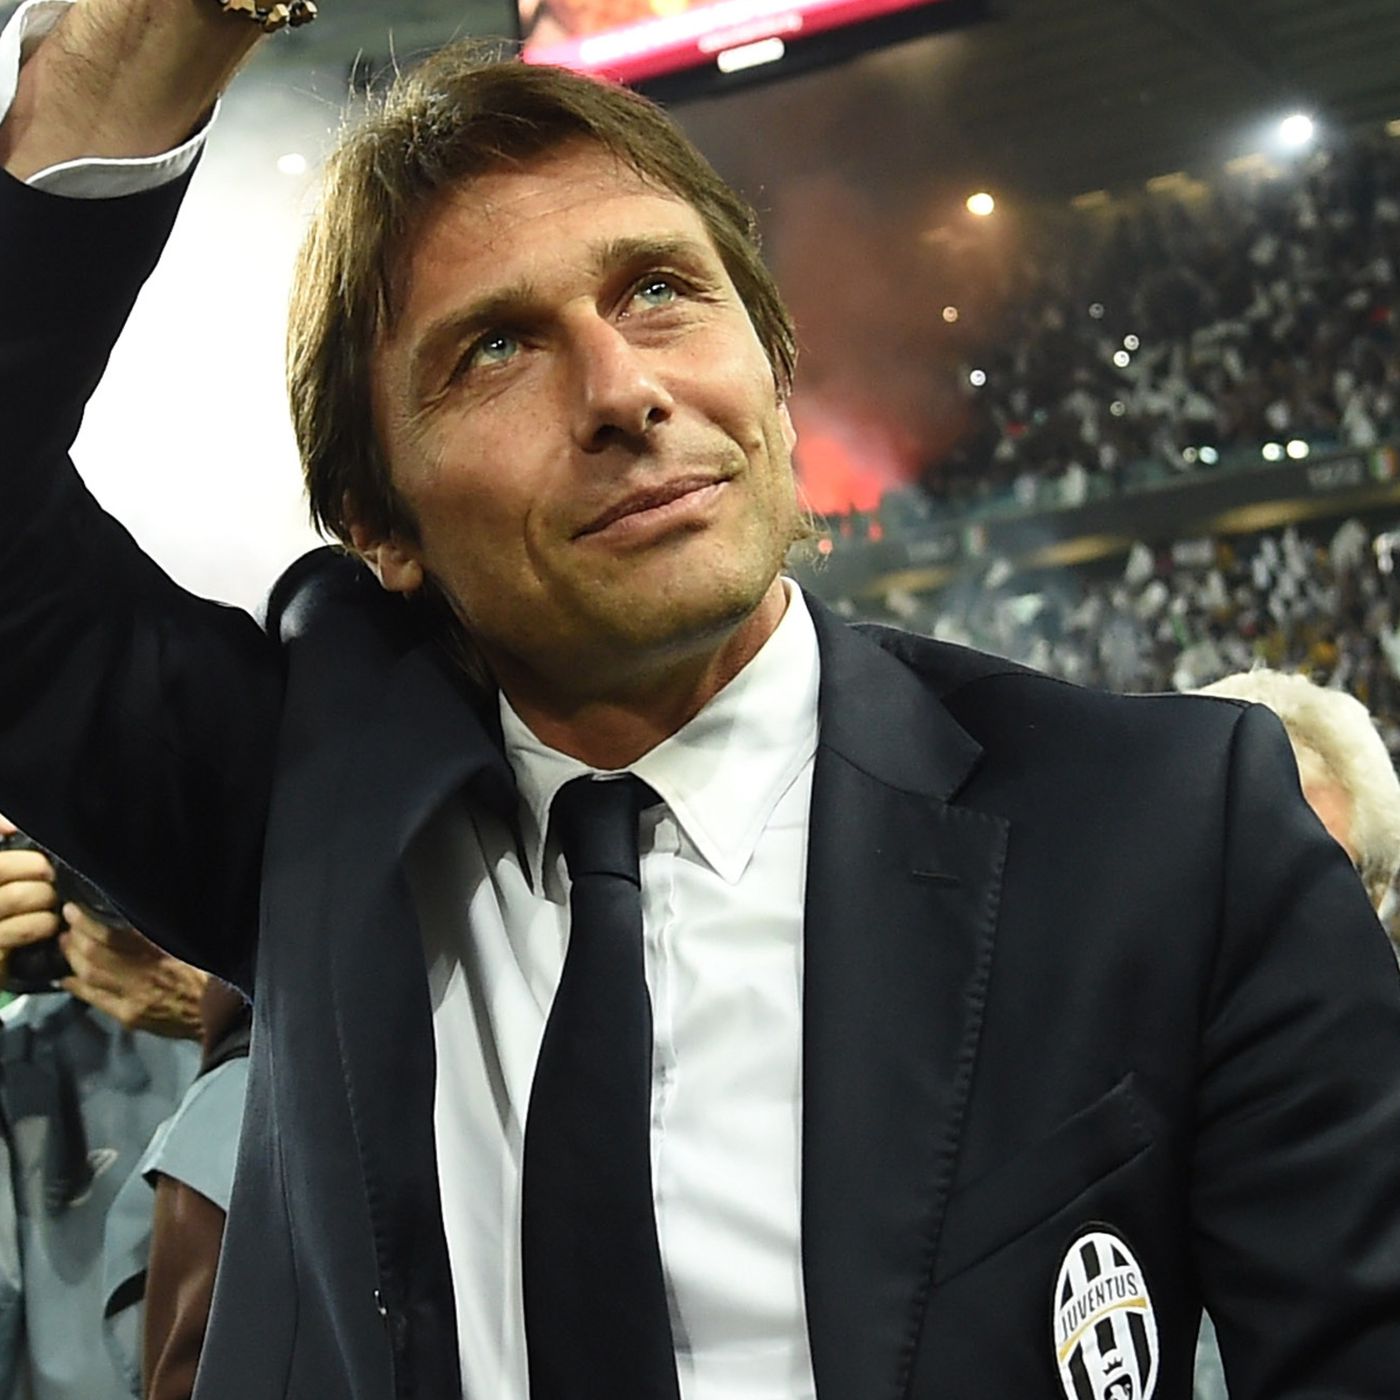 Antonio Conte was the reason for Juventus' turnaround - SBNation.com